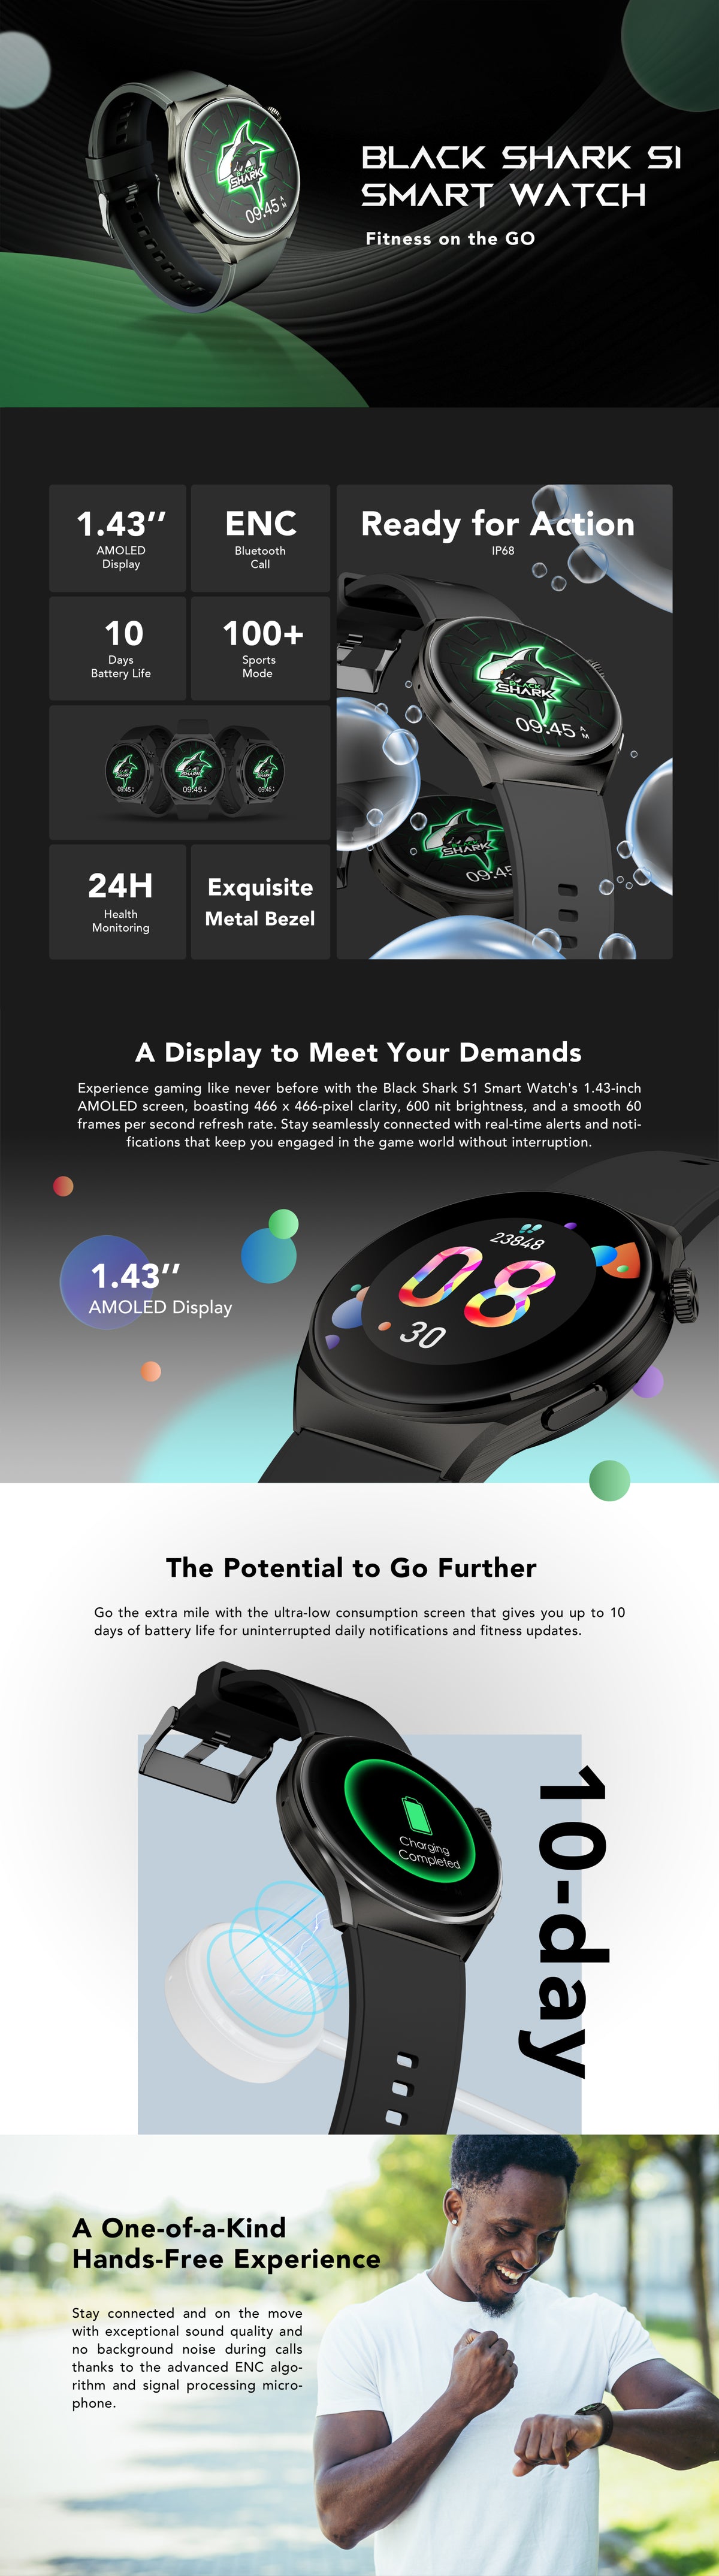 xiaomi-watch-s1 - Specifications - Xiaomi United Arab Emirates